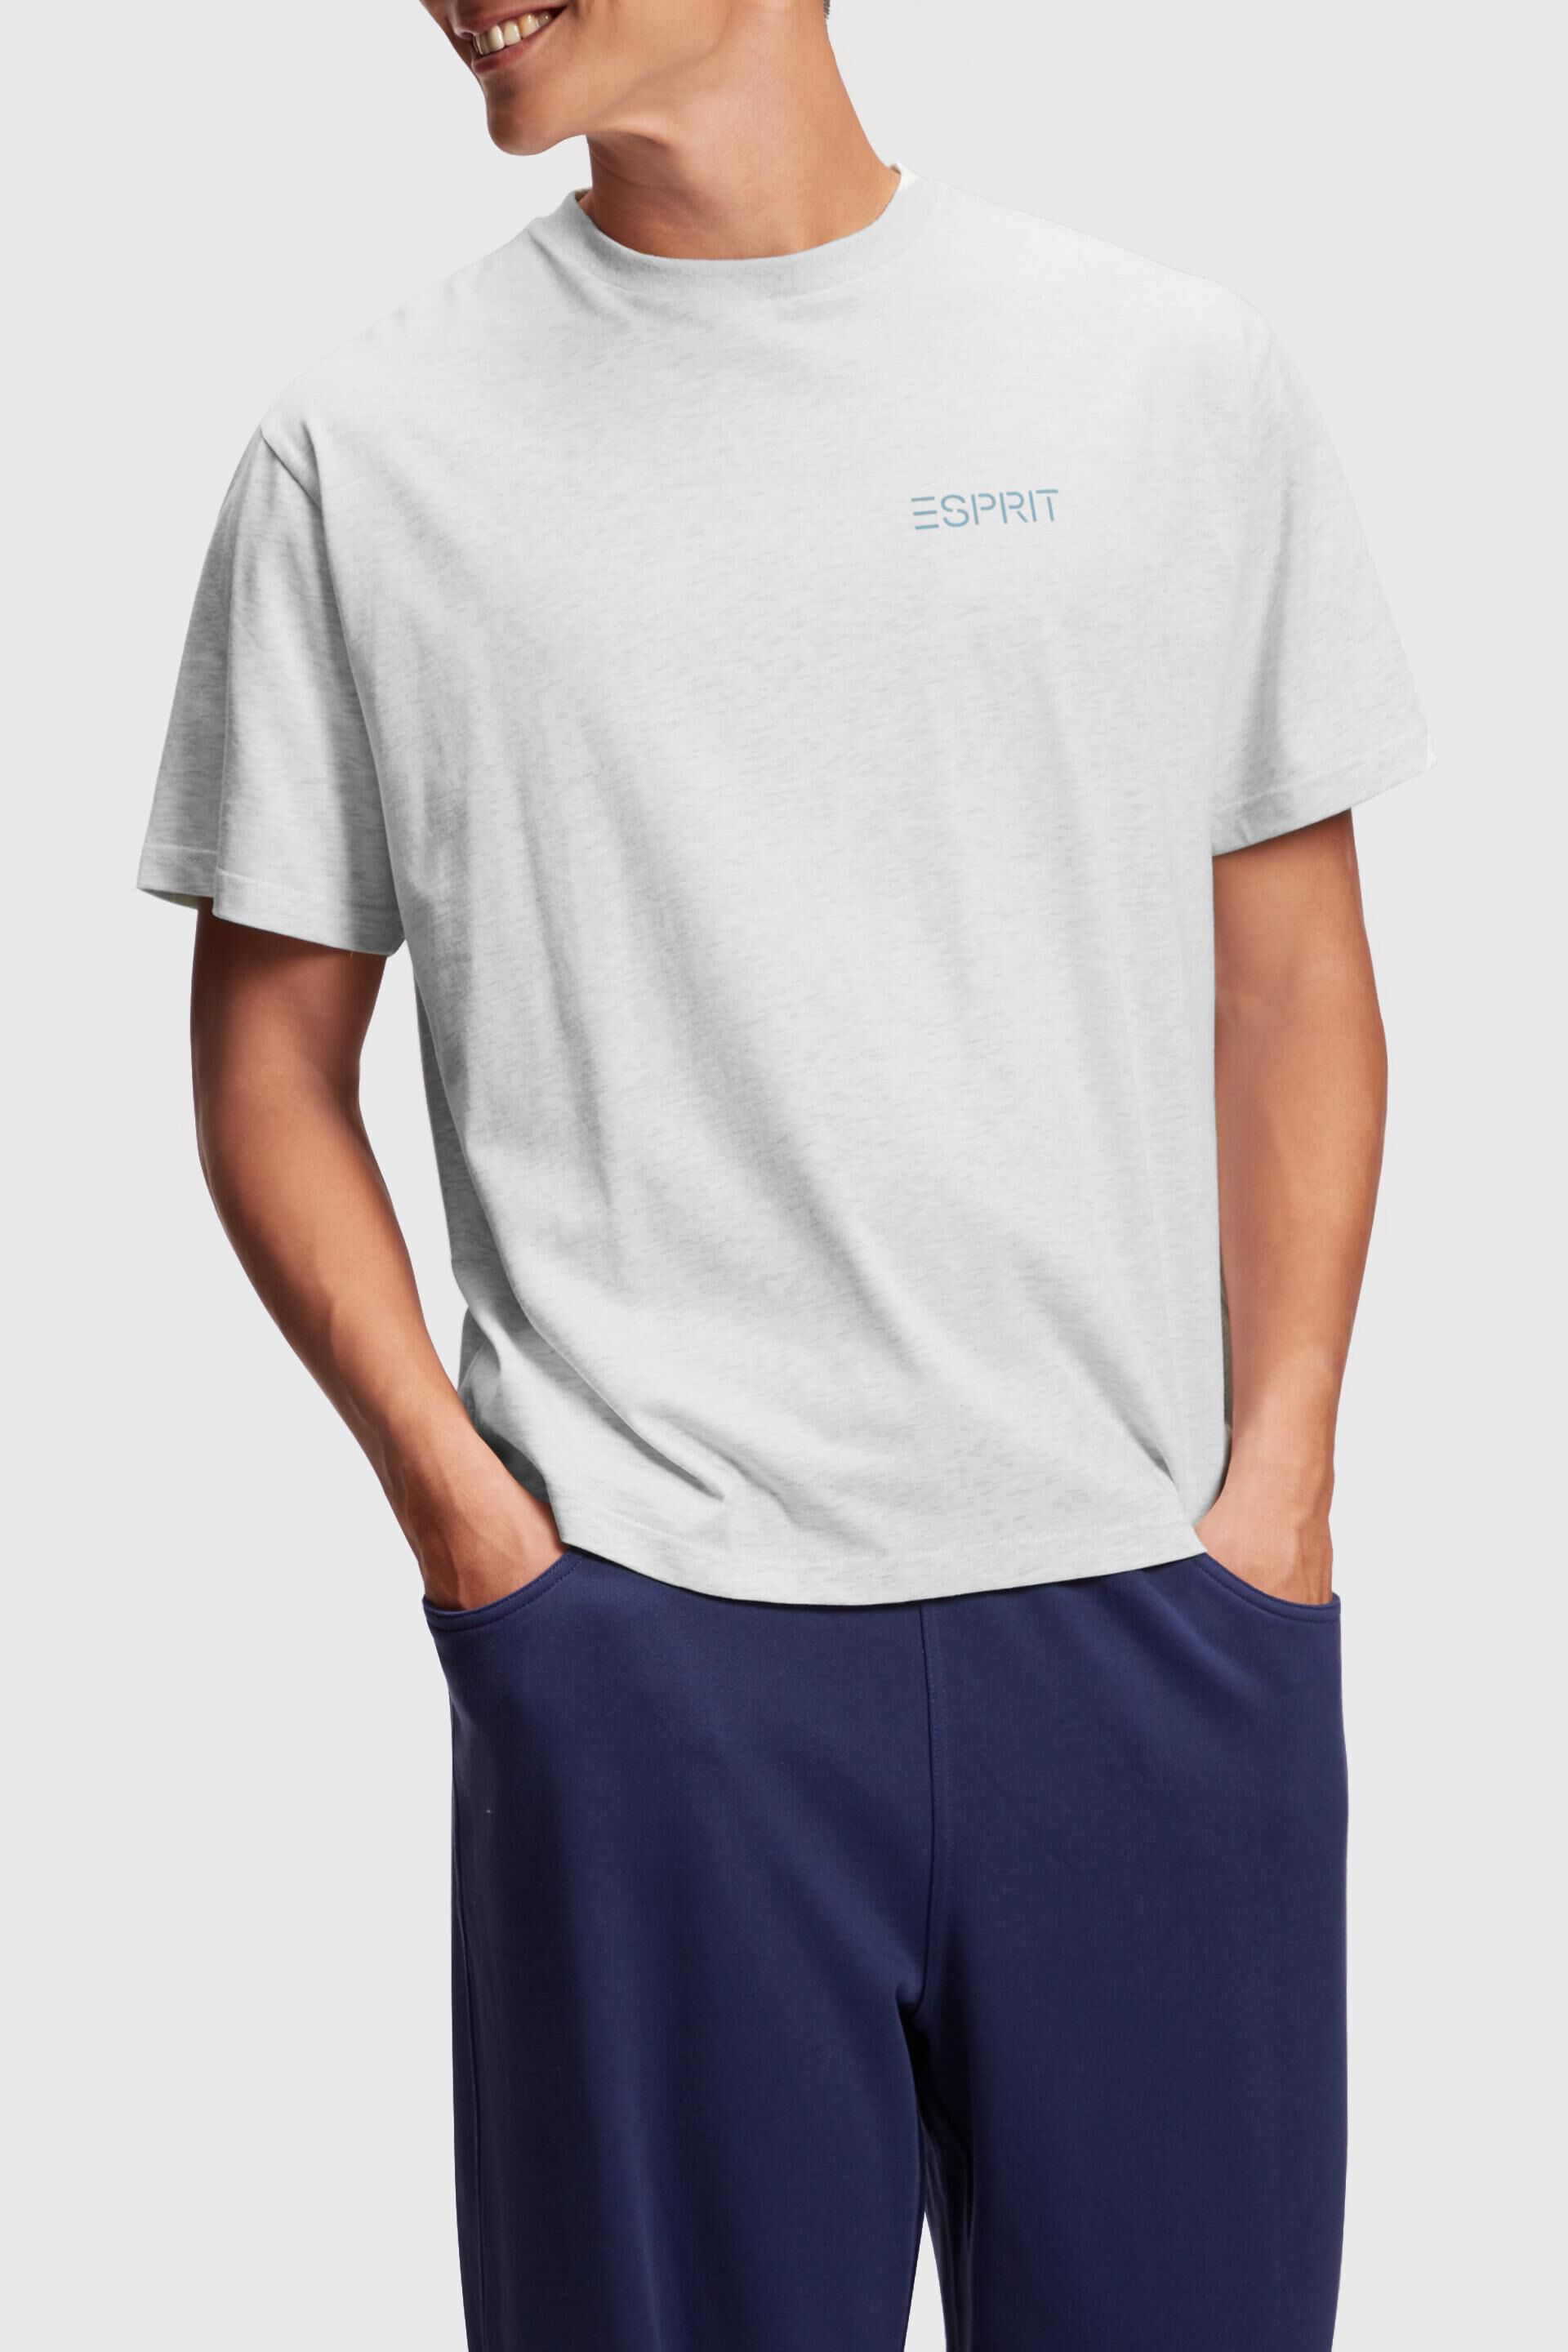 Esprit print Edition Seoul t-shirt